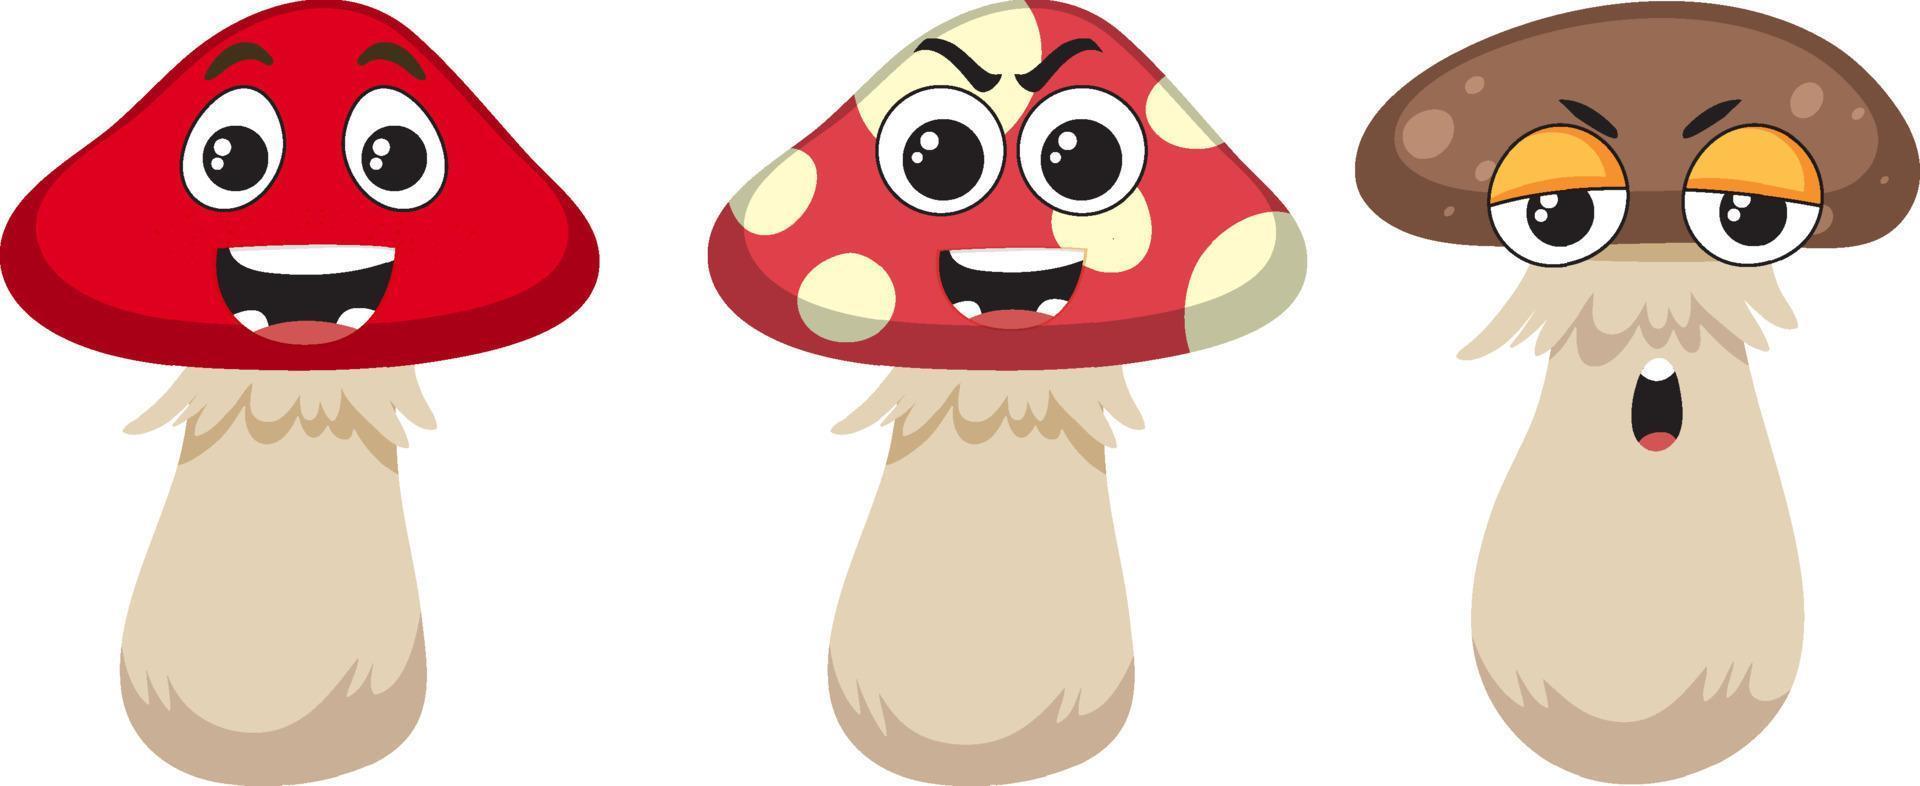 Cartoon mushrooms with facial expression vector